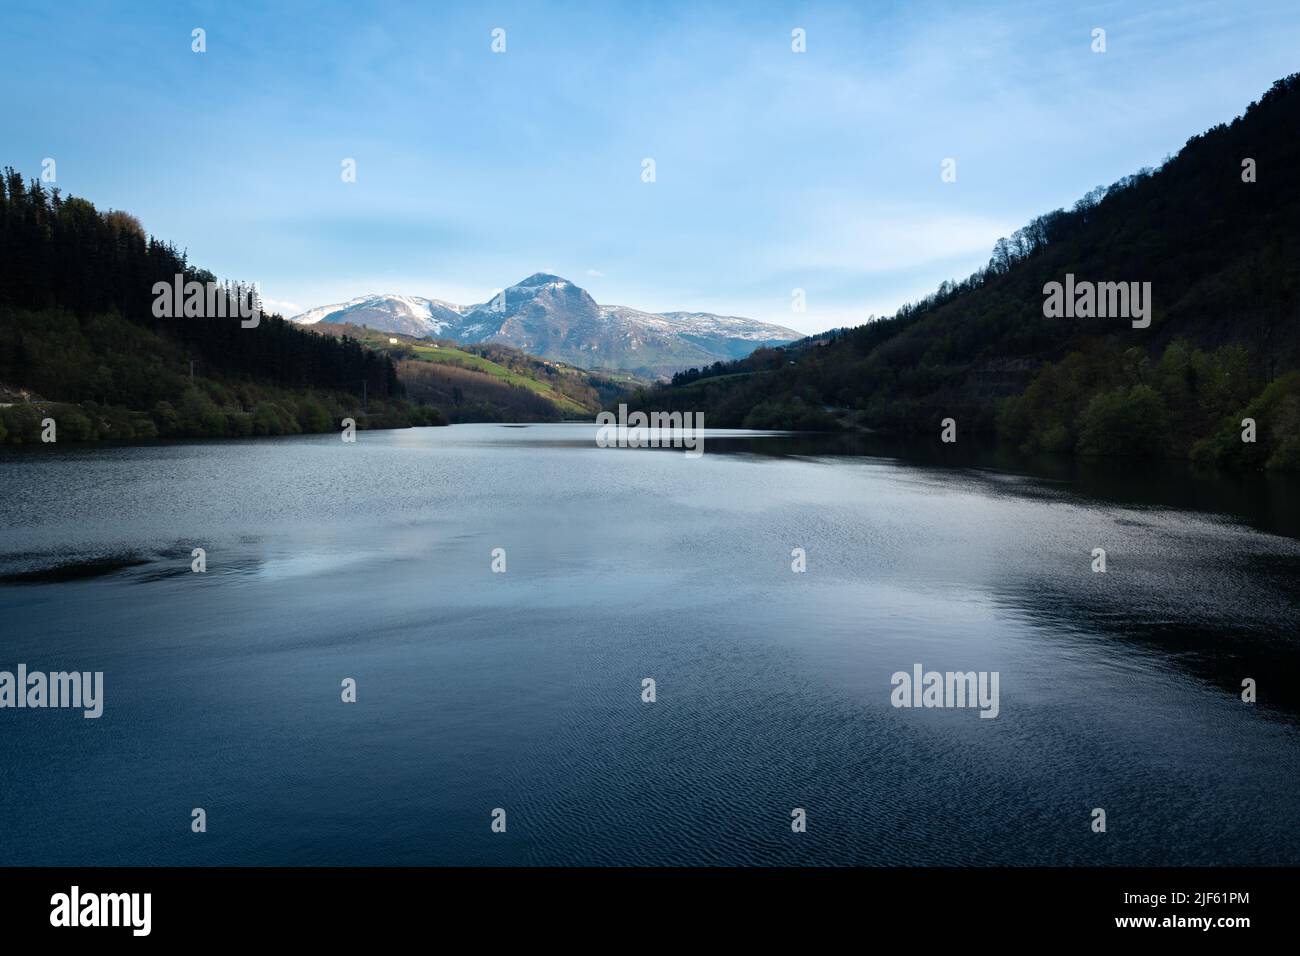 Ibiur bacino con Txindoki montagna come sfondo, Paesi Baschi in Spagna Foto Stock